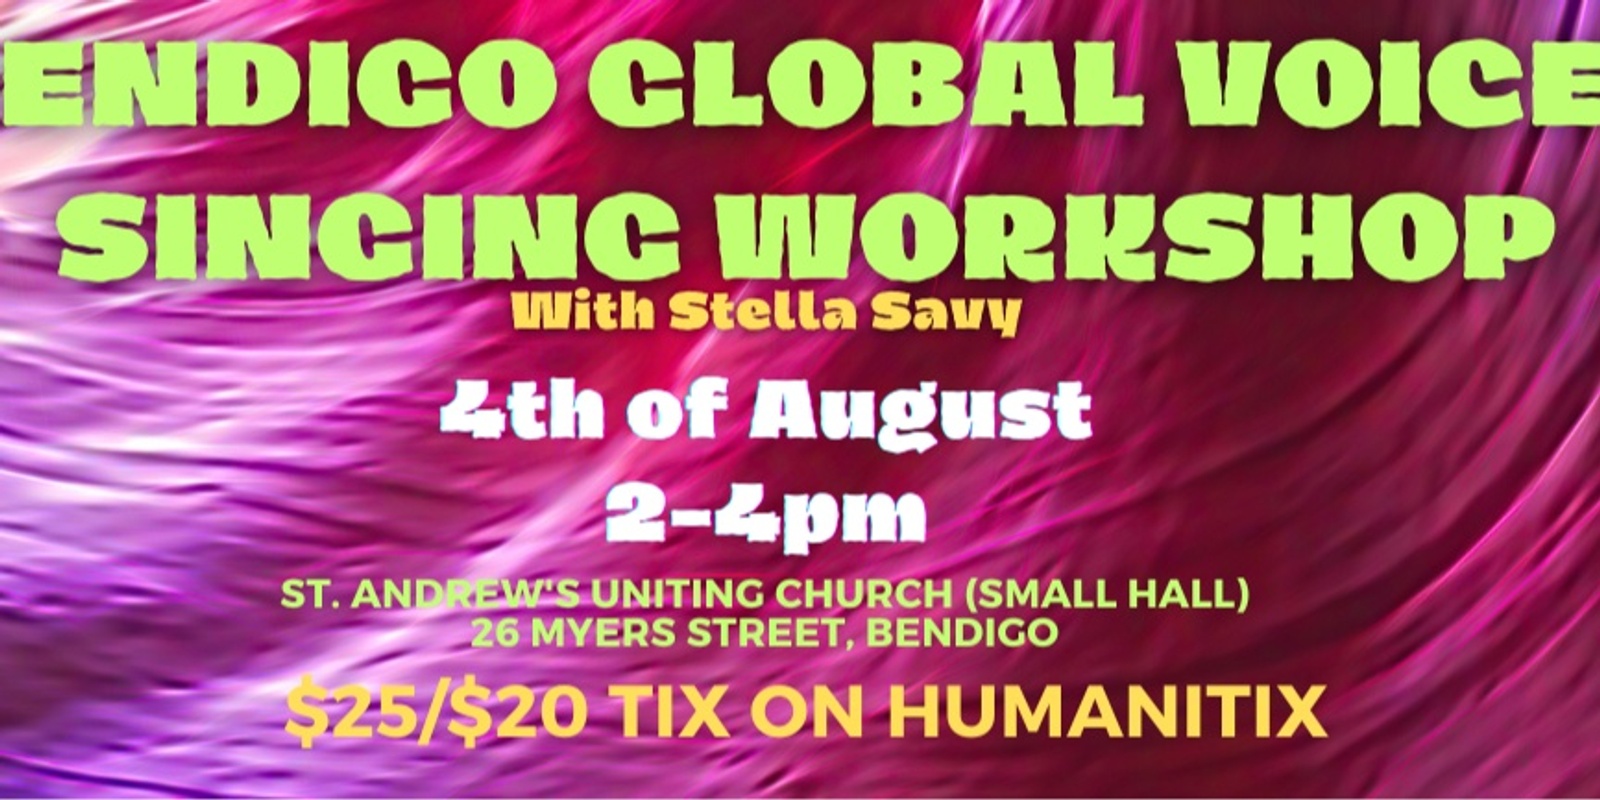 Banner image for 4th of Aug Bendigo Global Voices Singing Workshop 